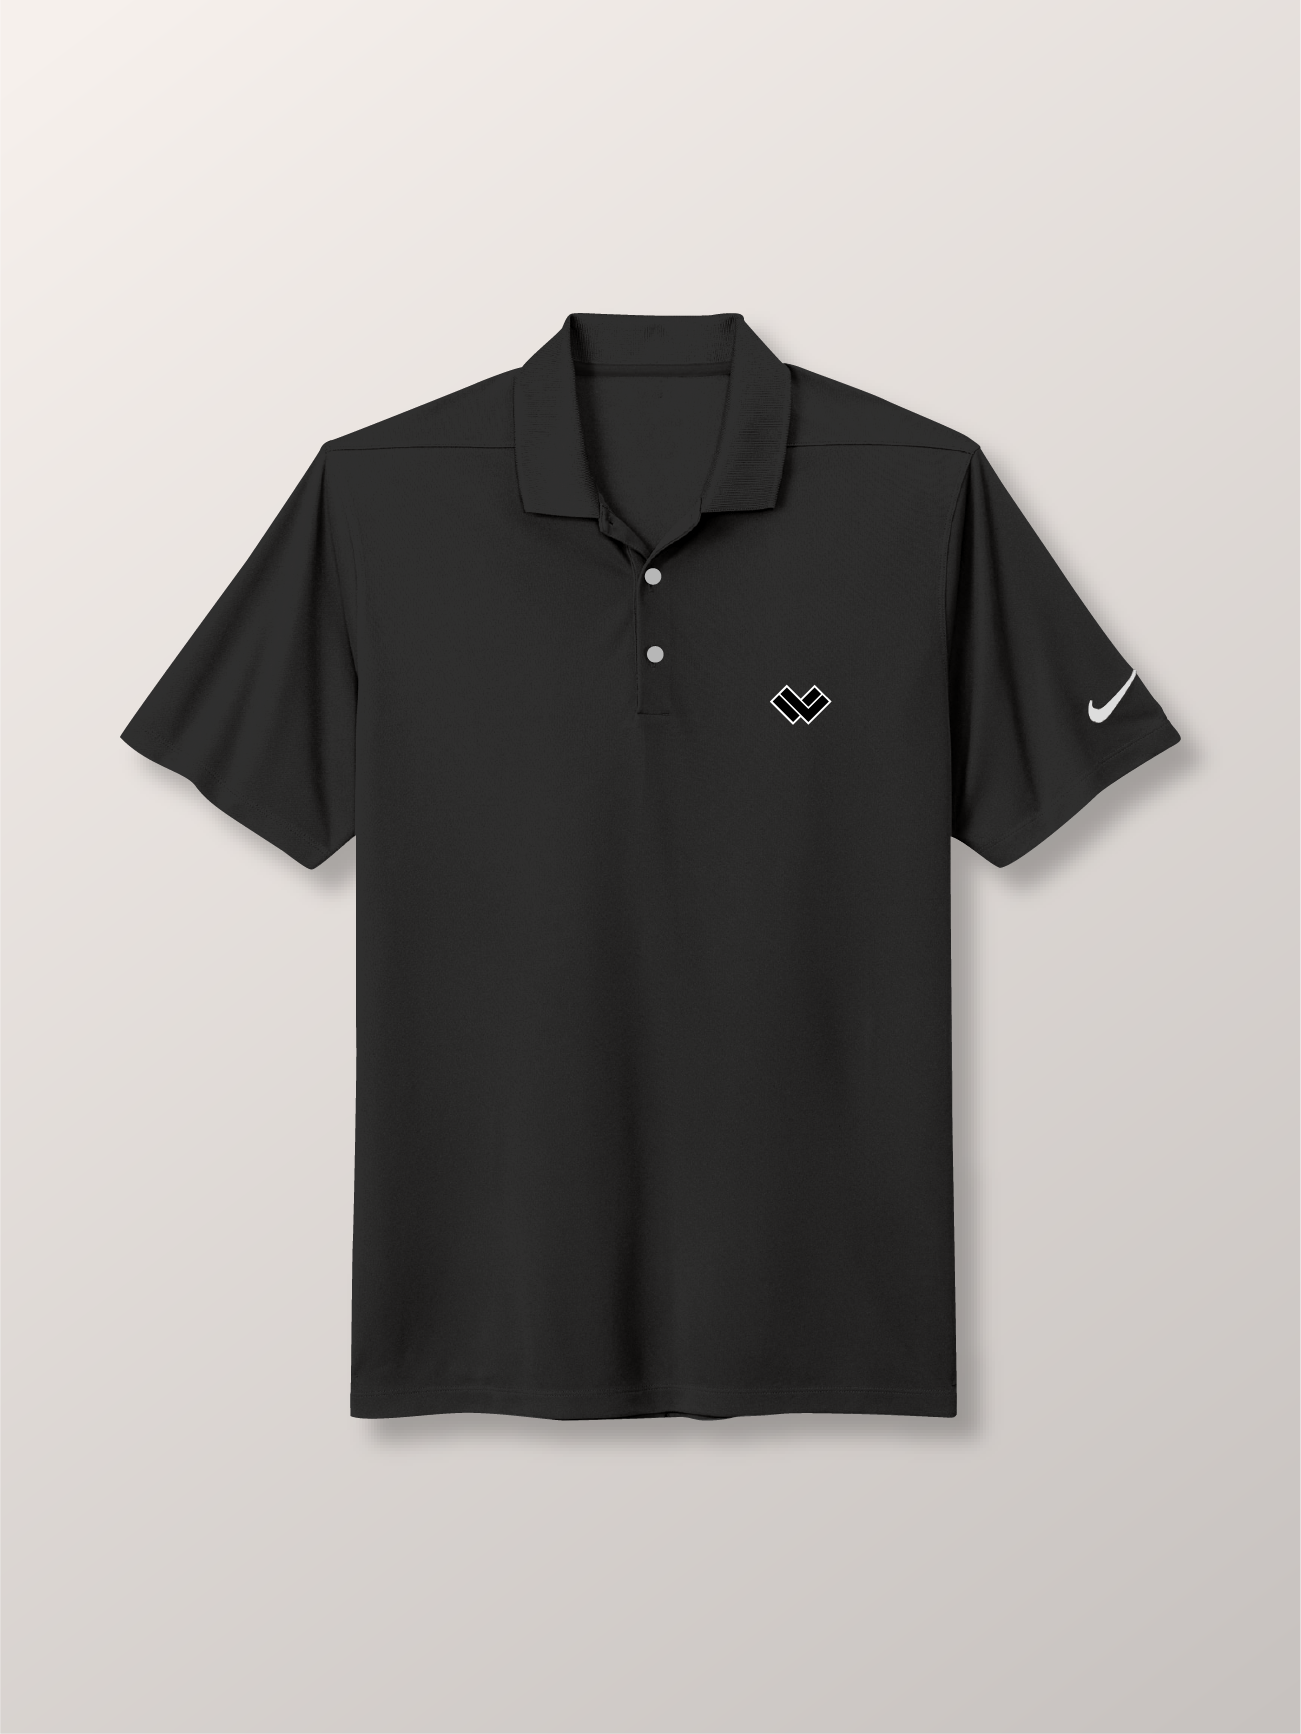 LAX World - Nike Dri-fit Micro-pique Black Lacrosse Polo Shirt - Front 